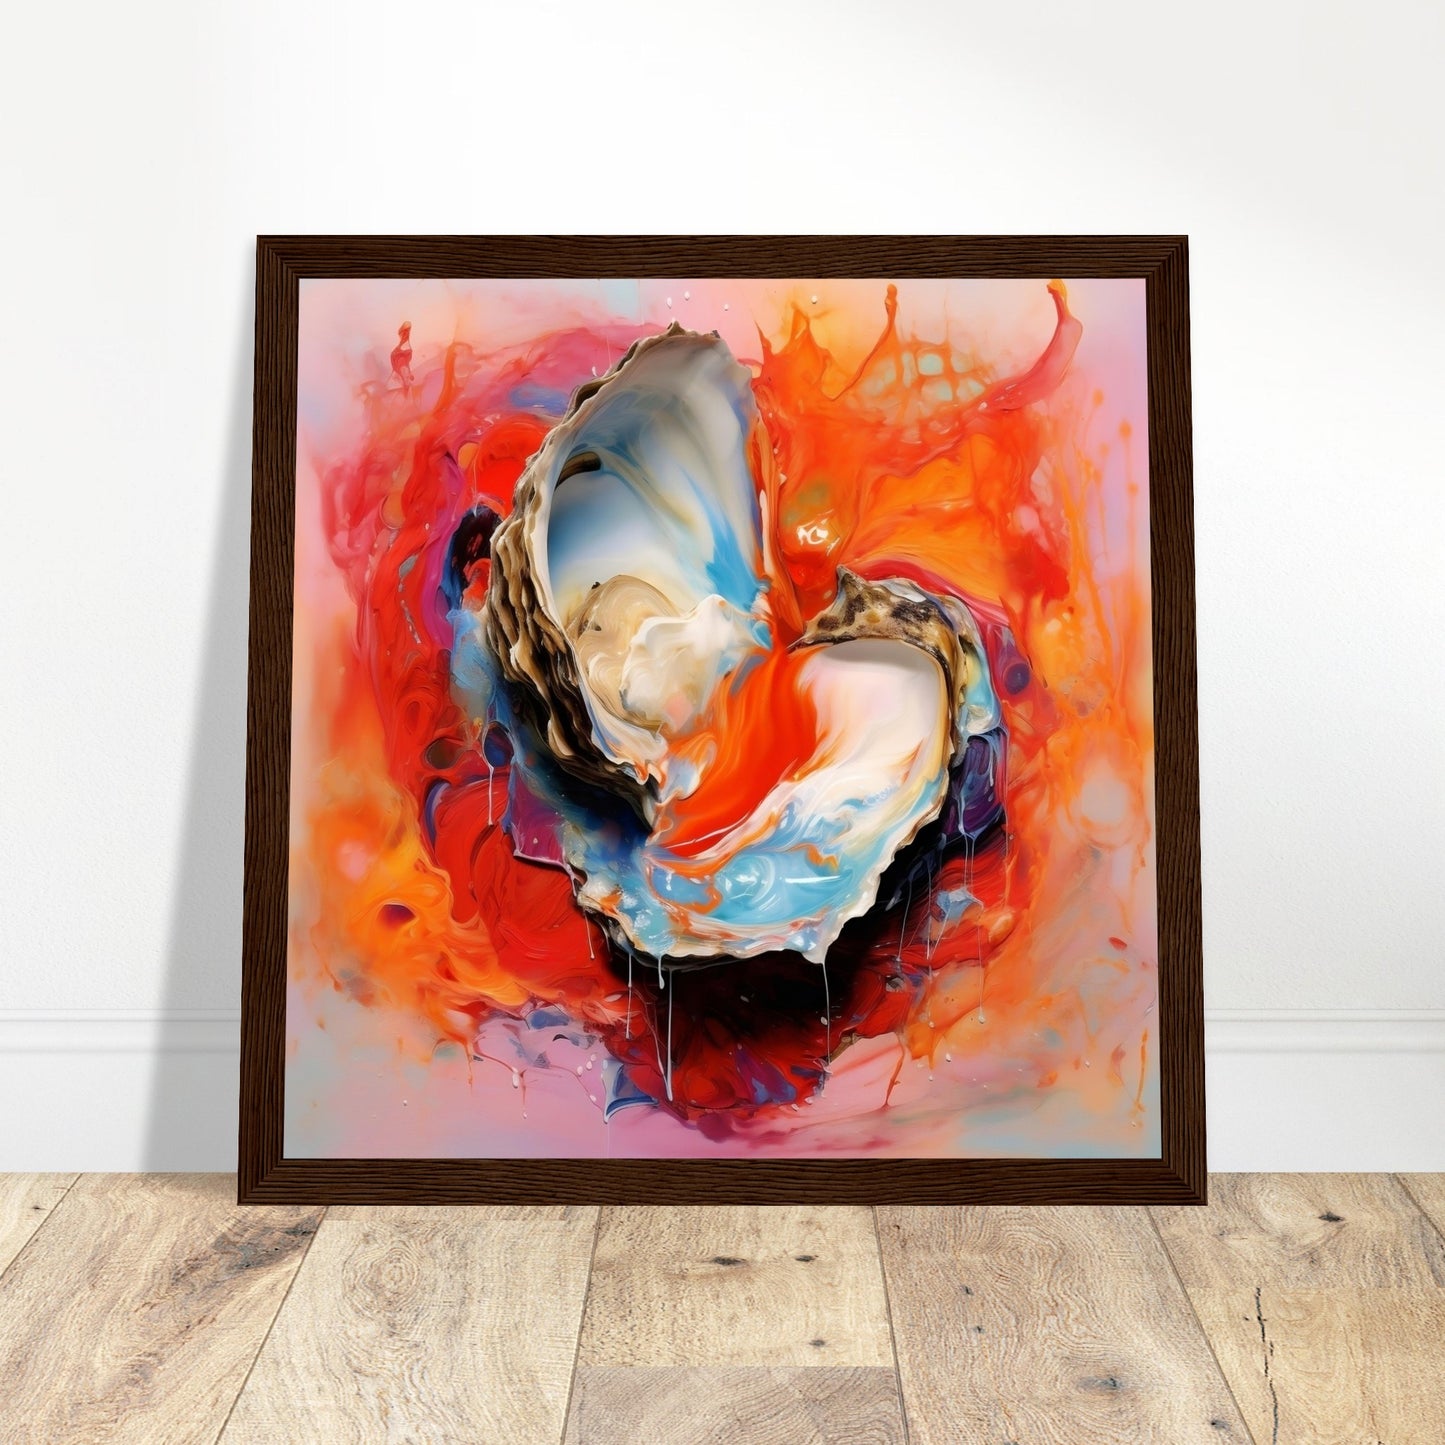 Exclusive Oyster Sea Artwork #5 - Print Room Ltd Black frame 70x70 cm / 28x28"